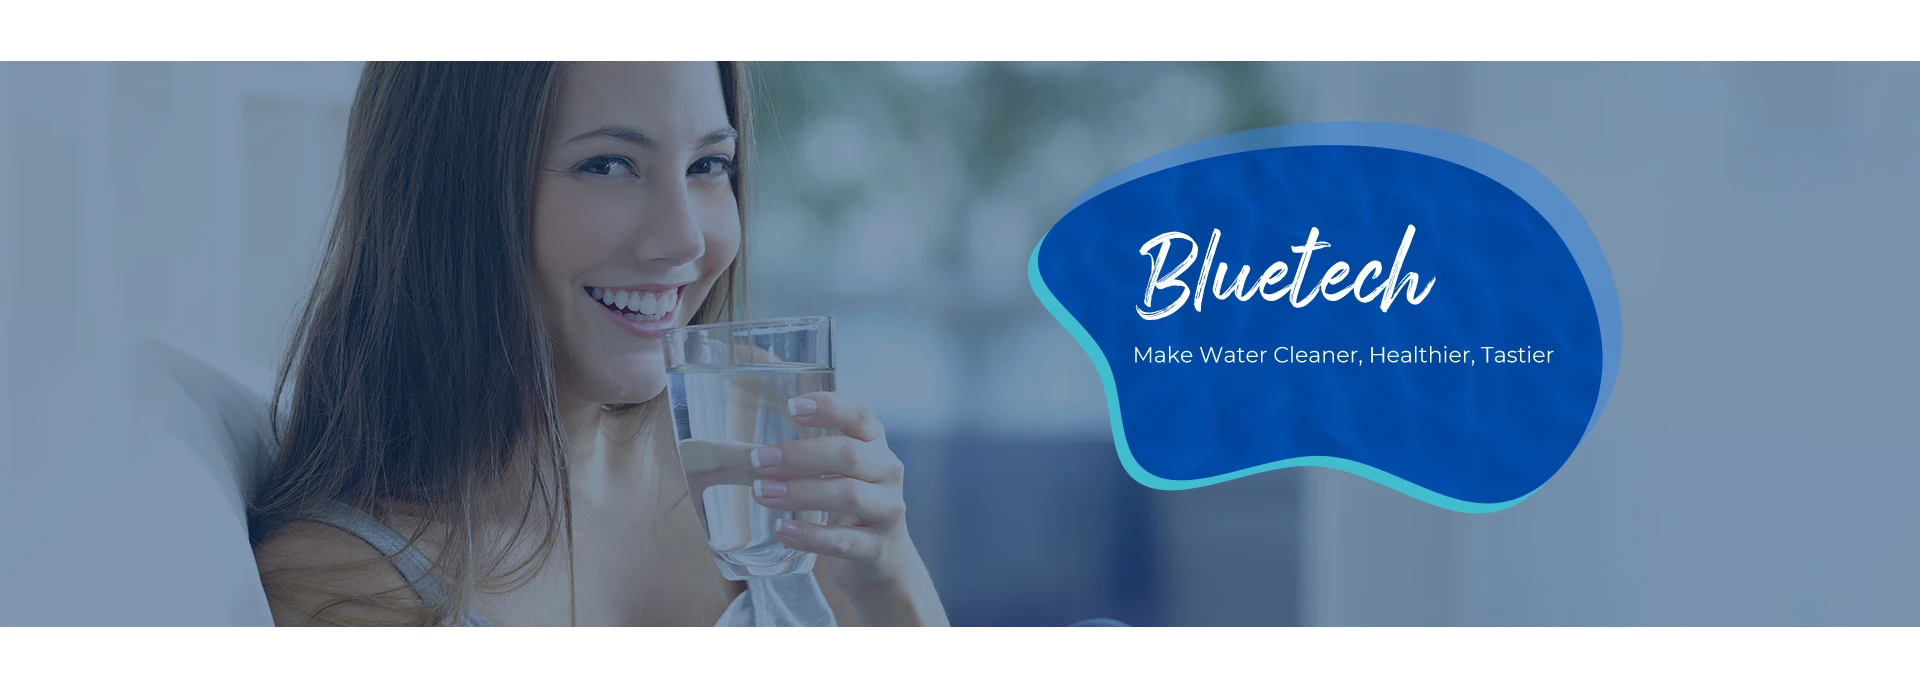 bluetech water